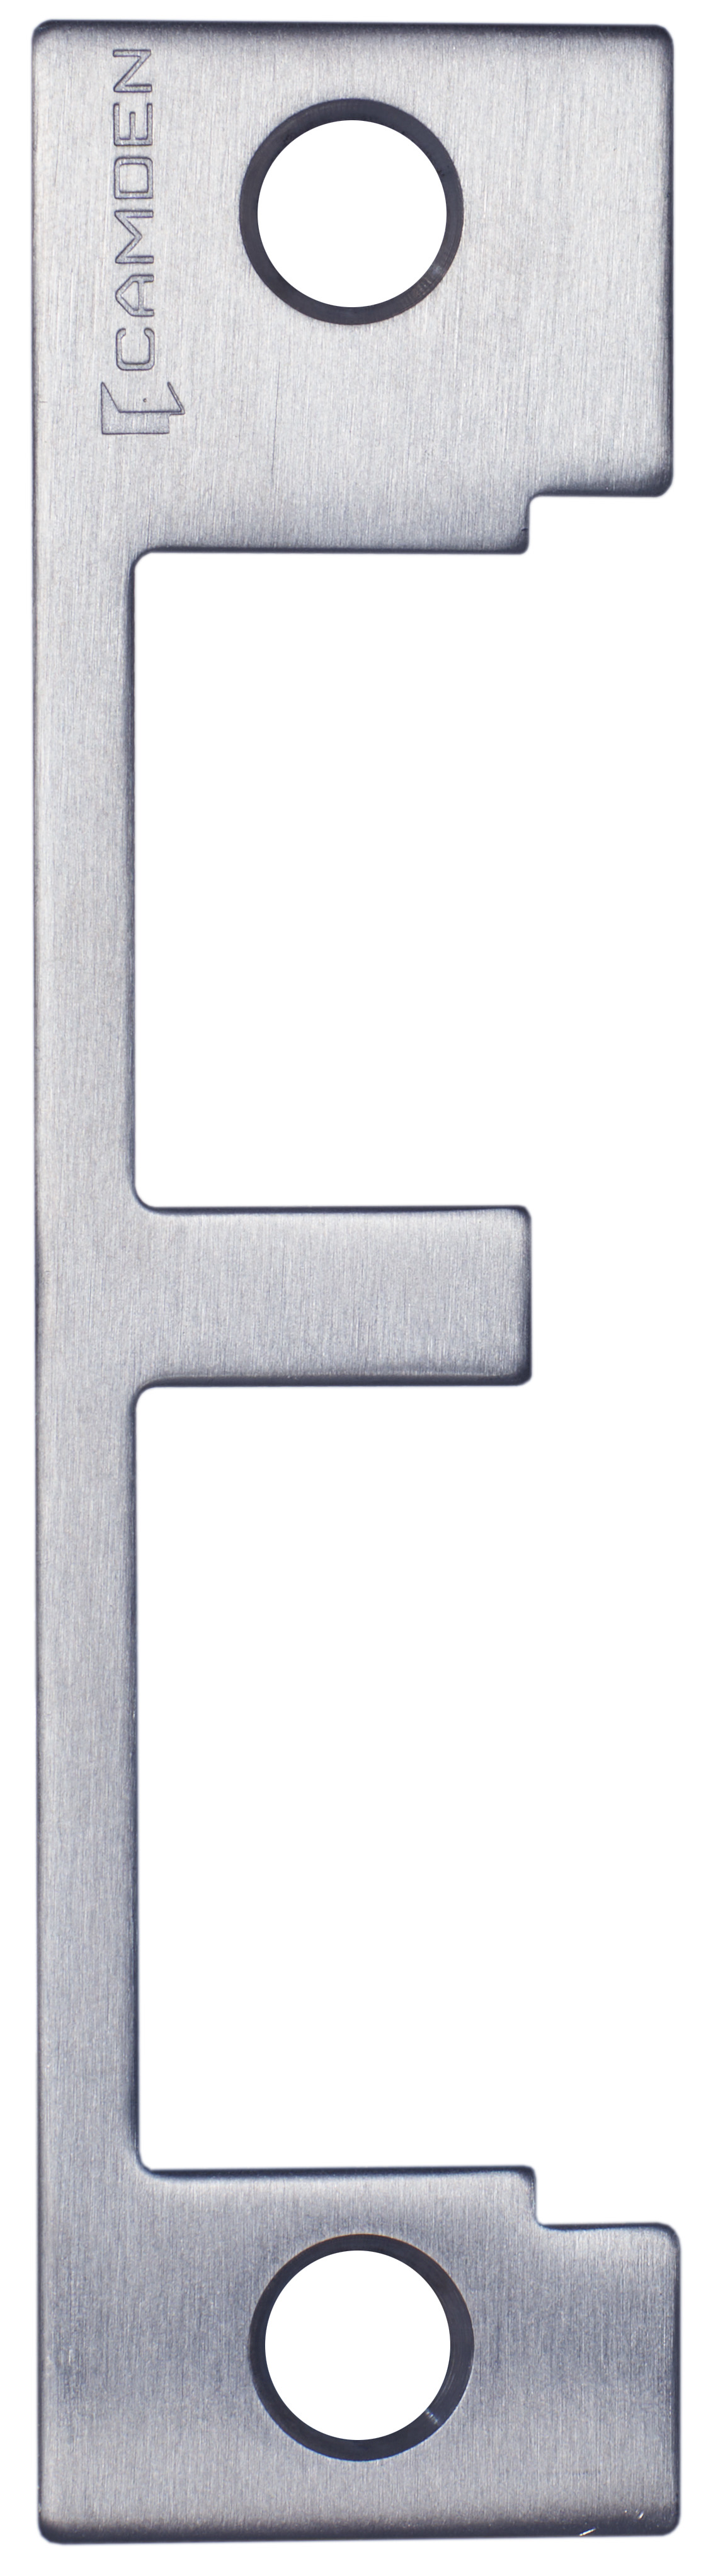 CX-1015: CX-93 Series:Shear Locks - Magnetic Locks